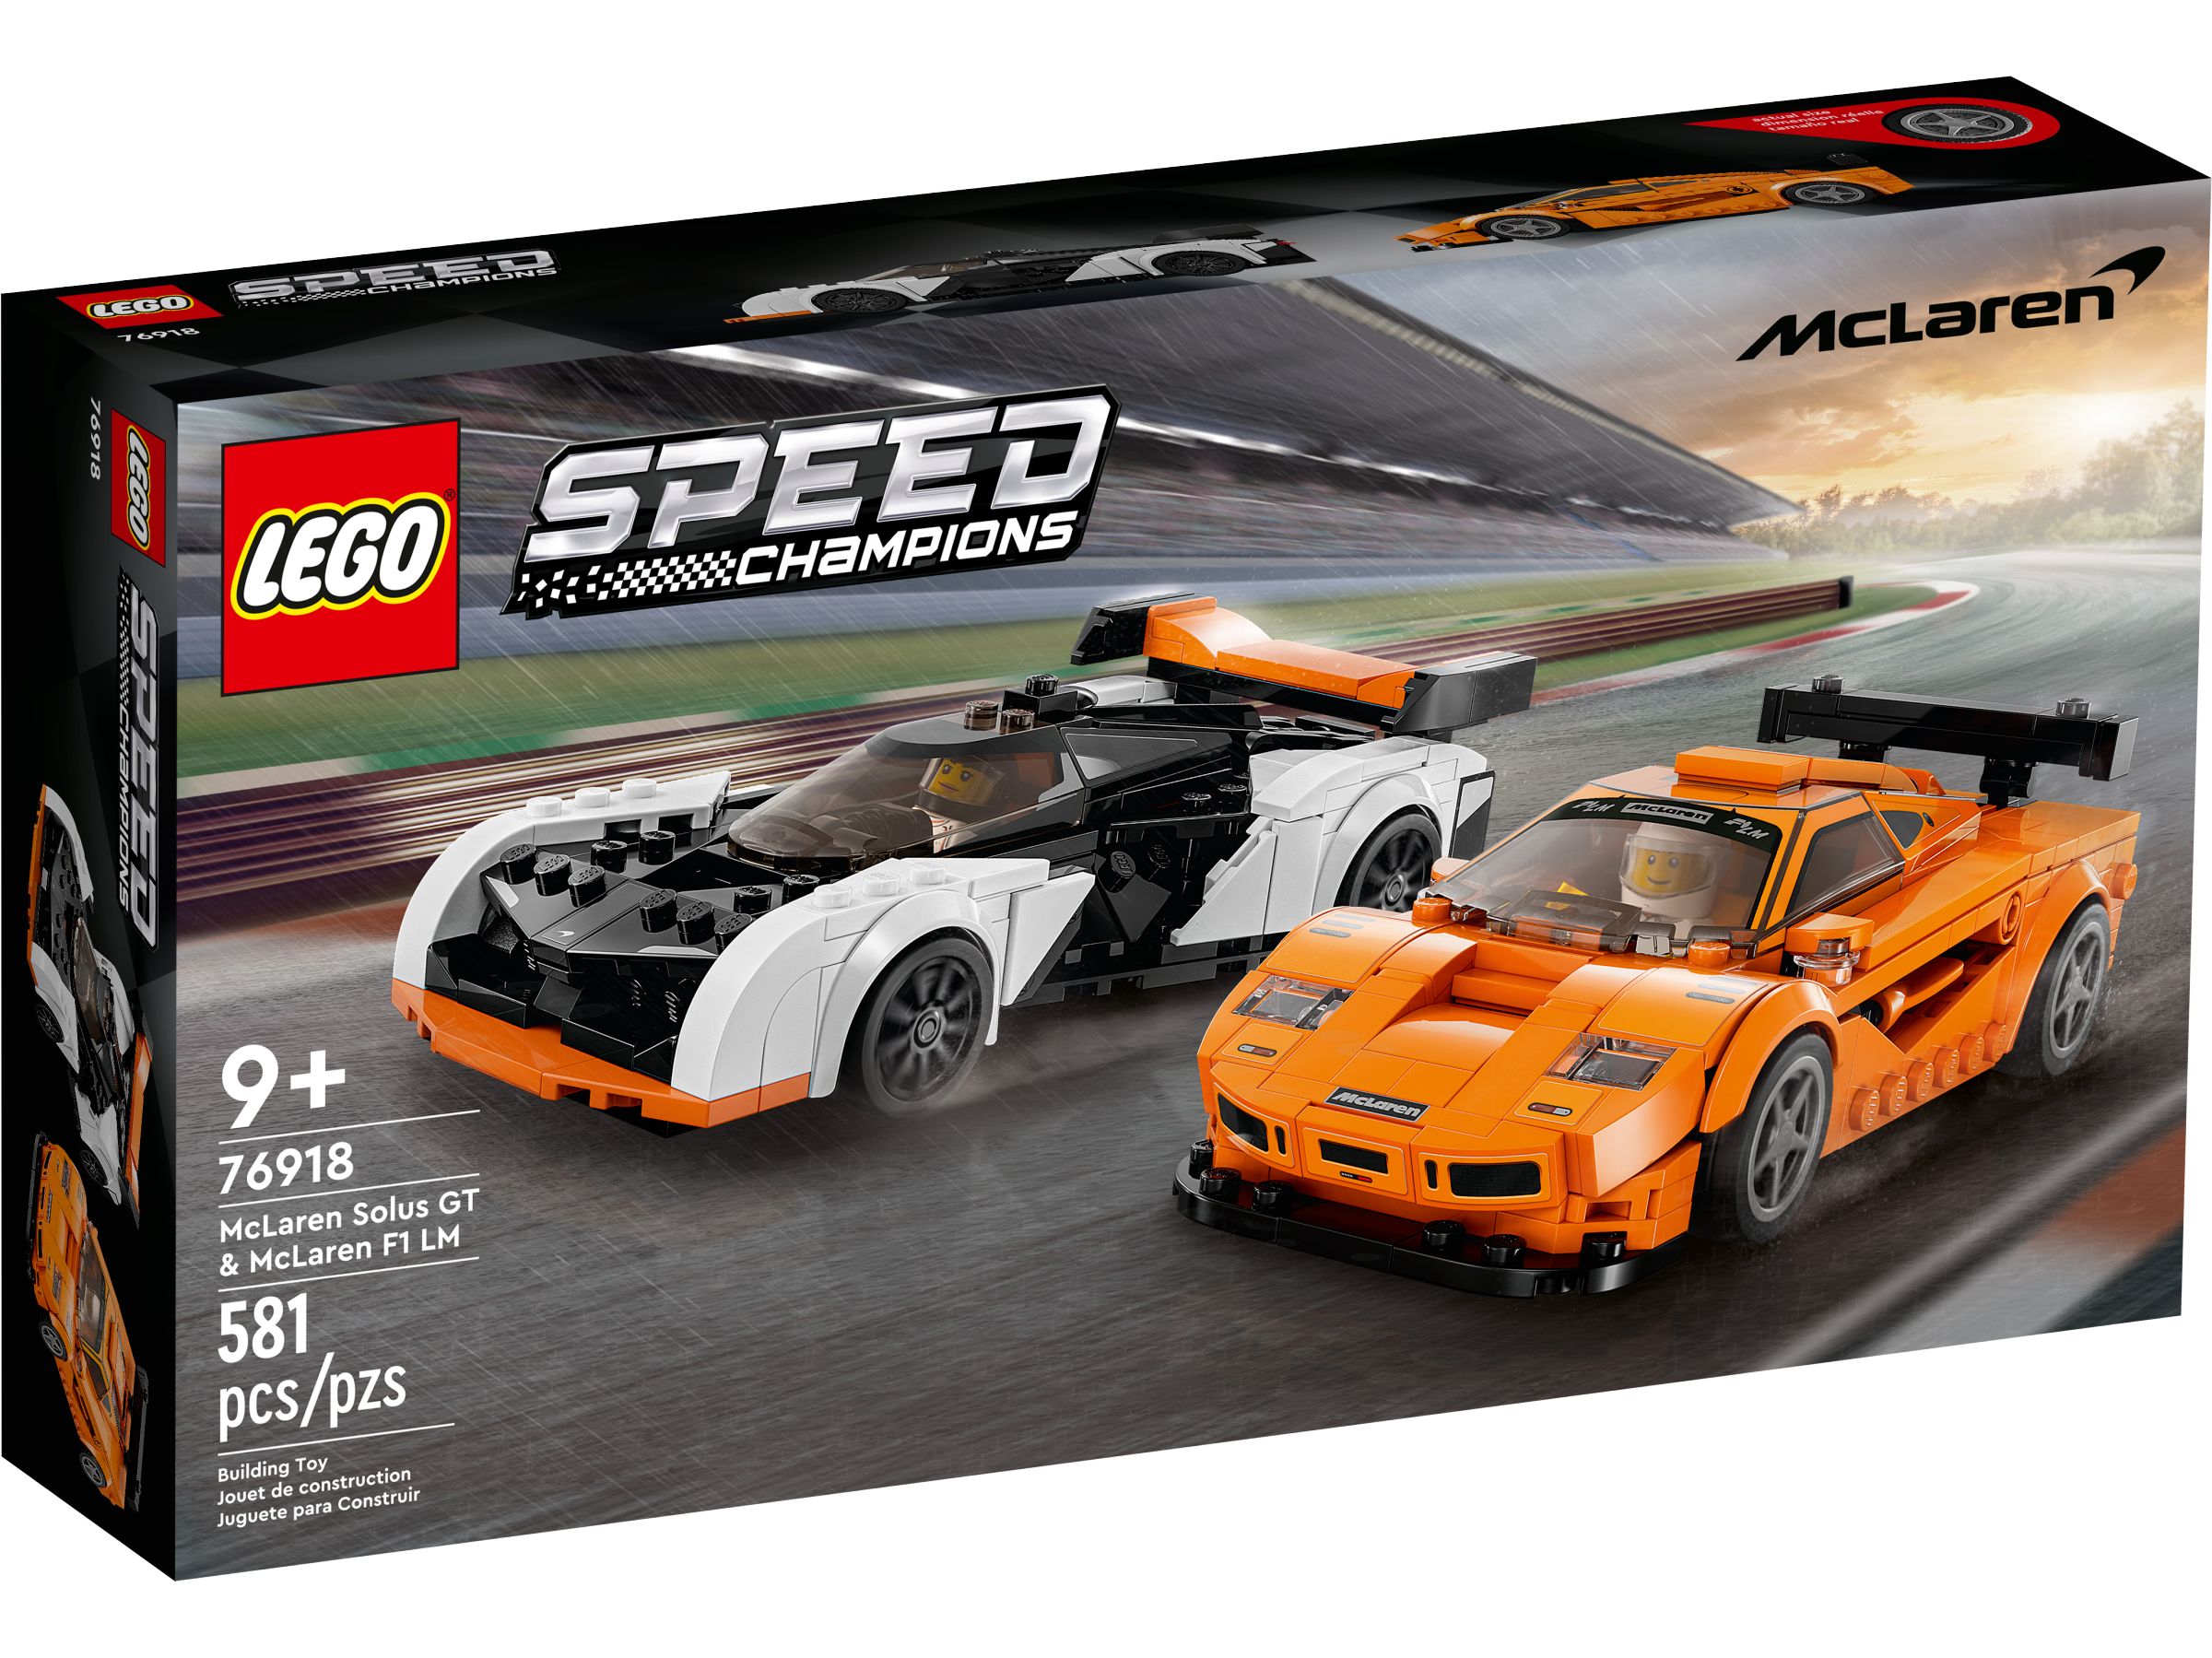 LEGO Speed Champions 76918 McLaren Solus GT & McLaren F1 LM LEGO_76918_alt1.jpg